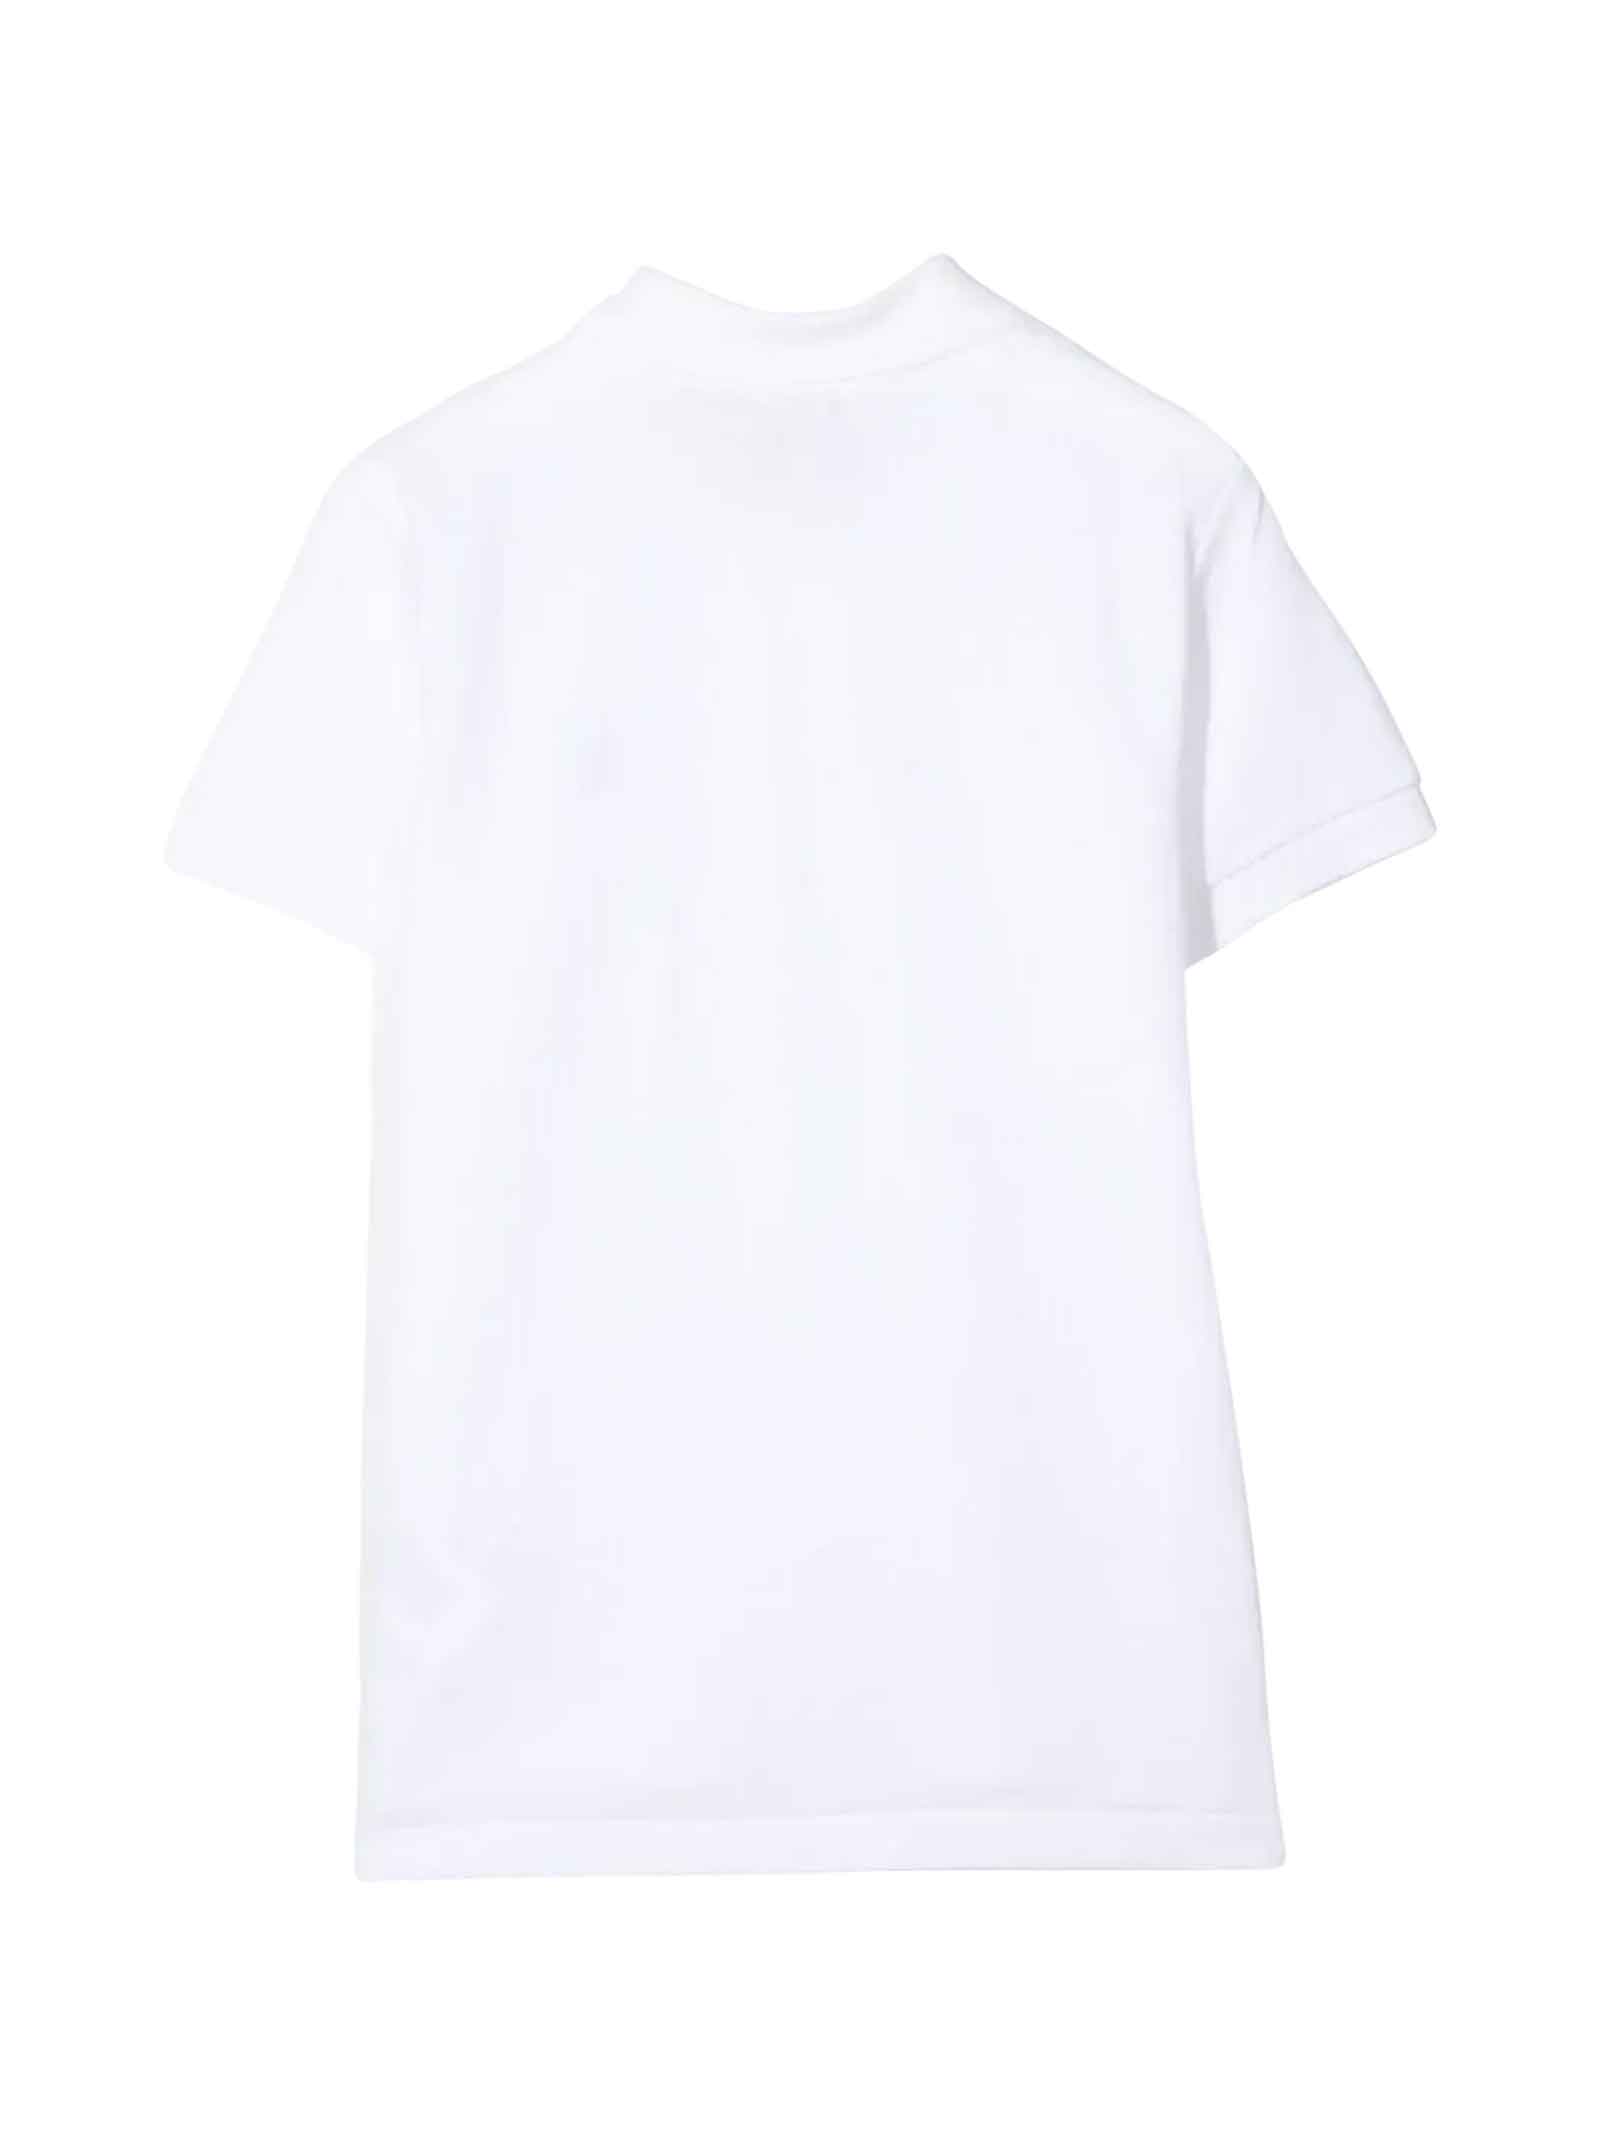 Shop Ralph Lauren White Polo Shirt Boy